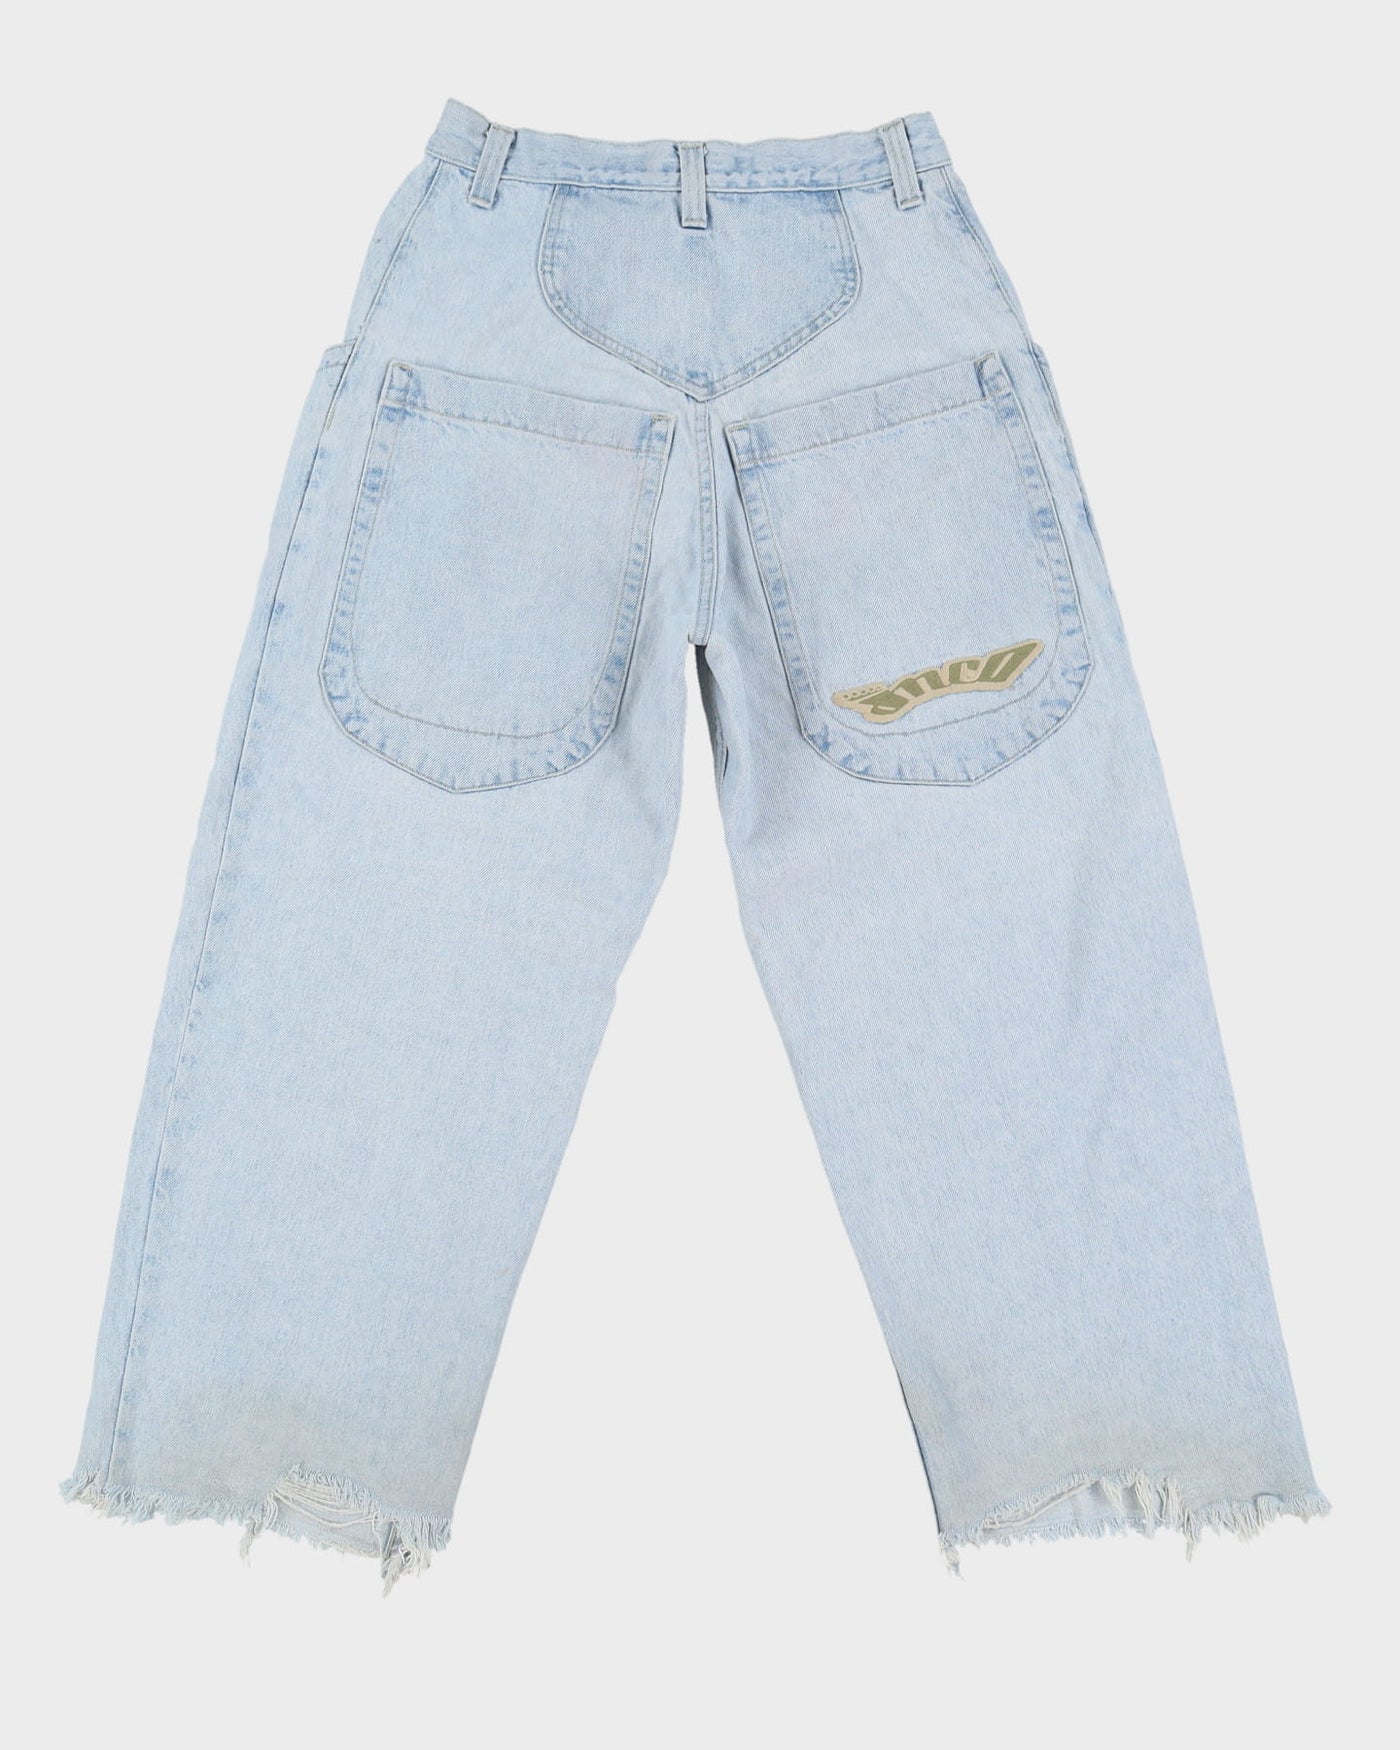 90s / 00s Y2K JNCO Light Wash Blue Jeans - W30 L27